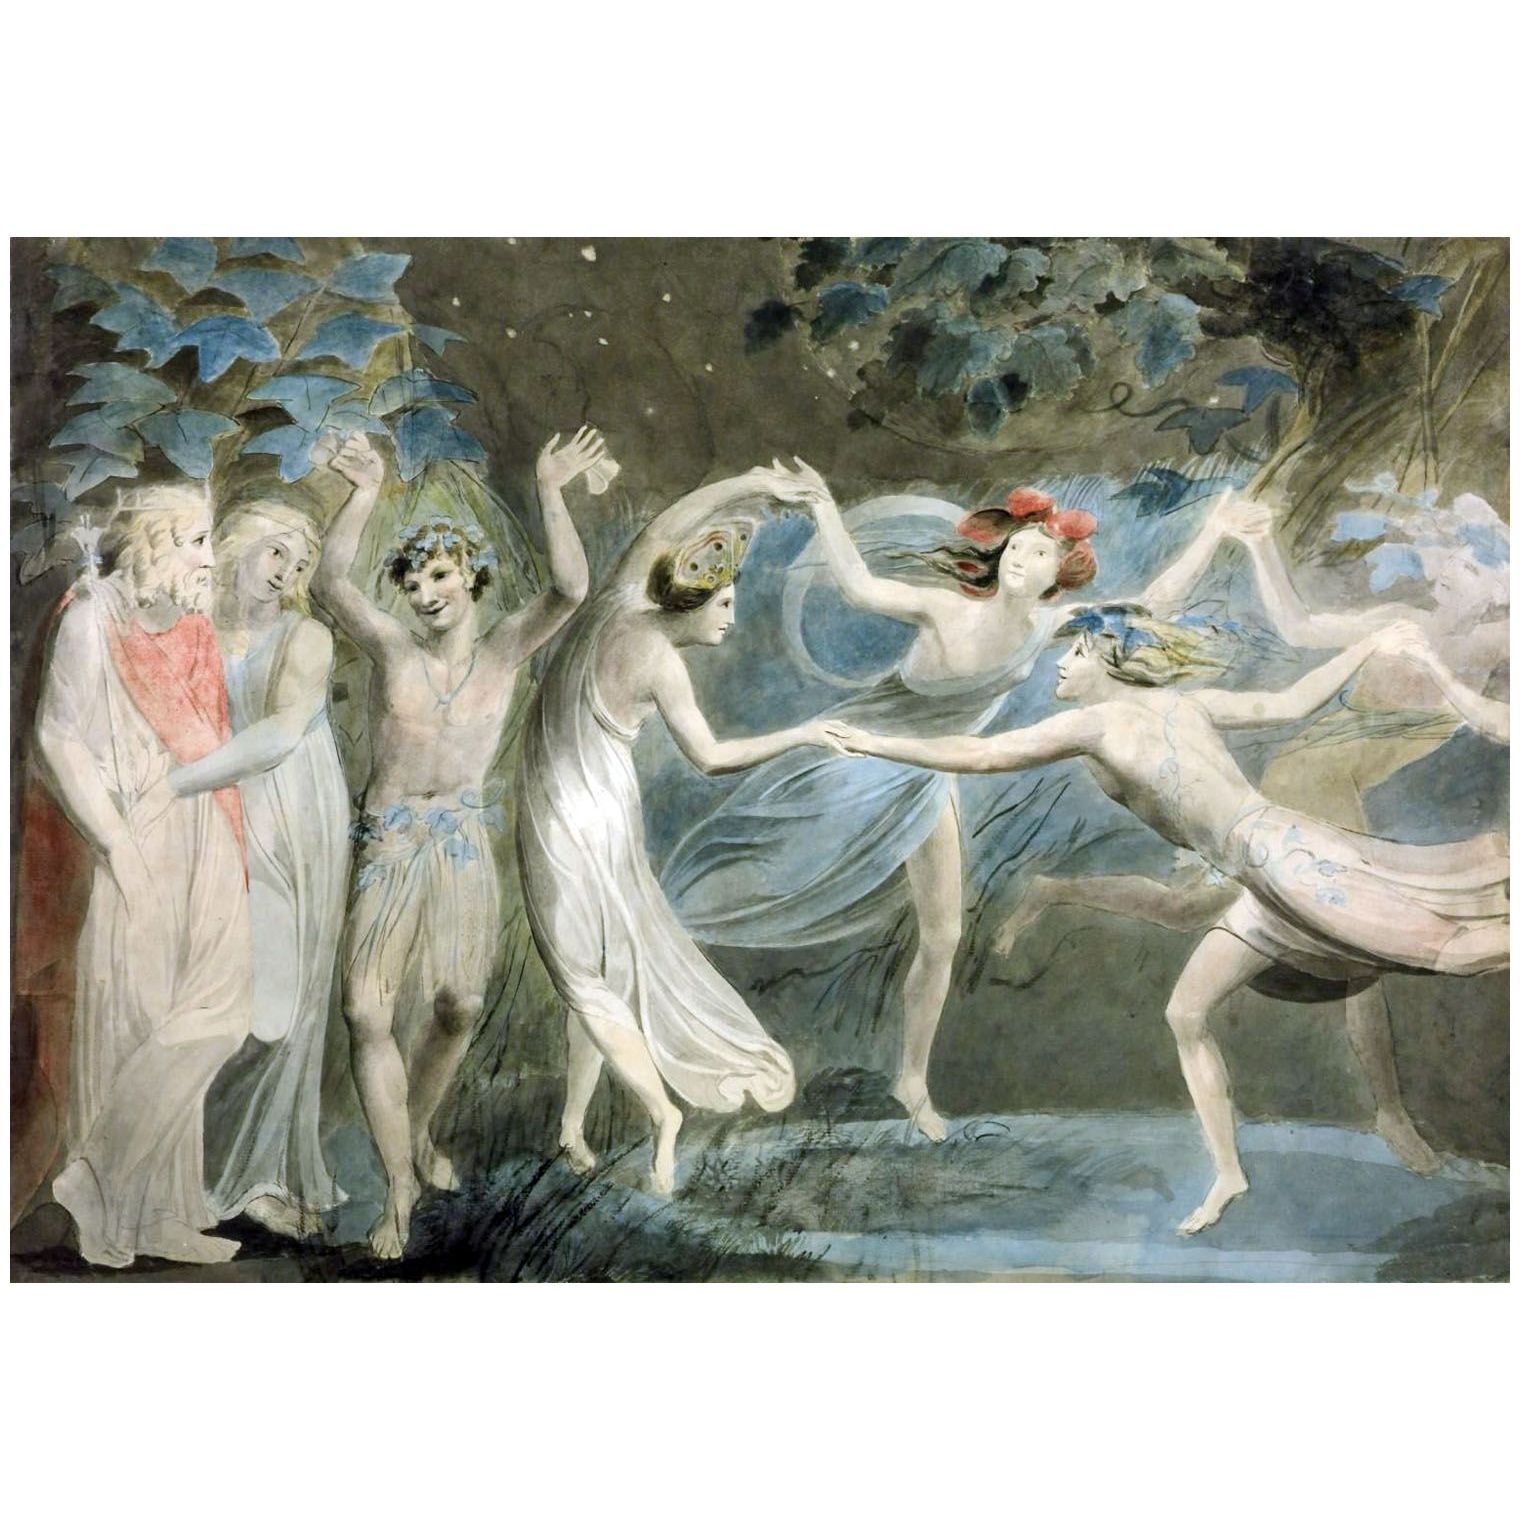 William Blake. Oberon, Titania and Puck with Fairies Dancing. 1786. Tate Britain